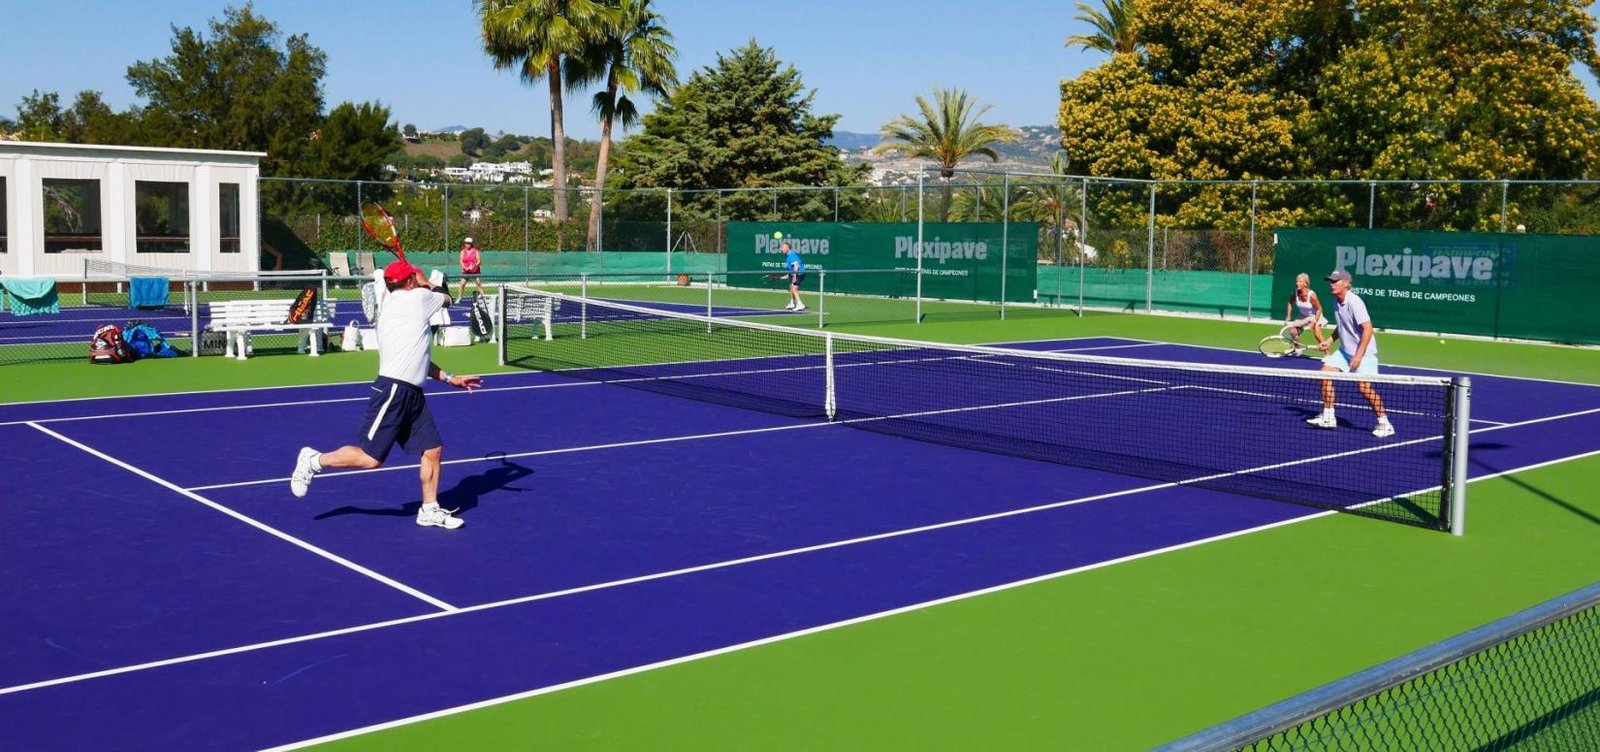 Aloha tennis club Malaga - Preparing surface for installation